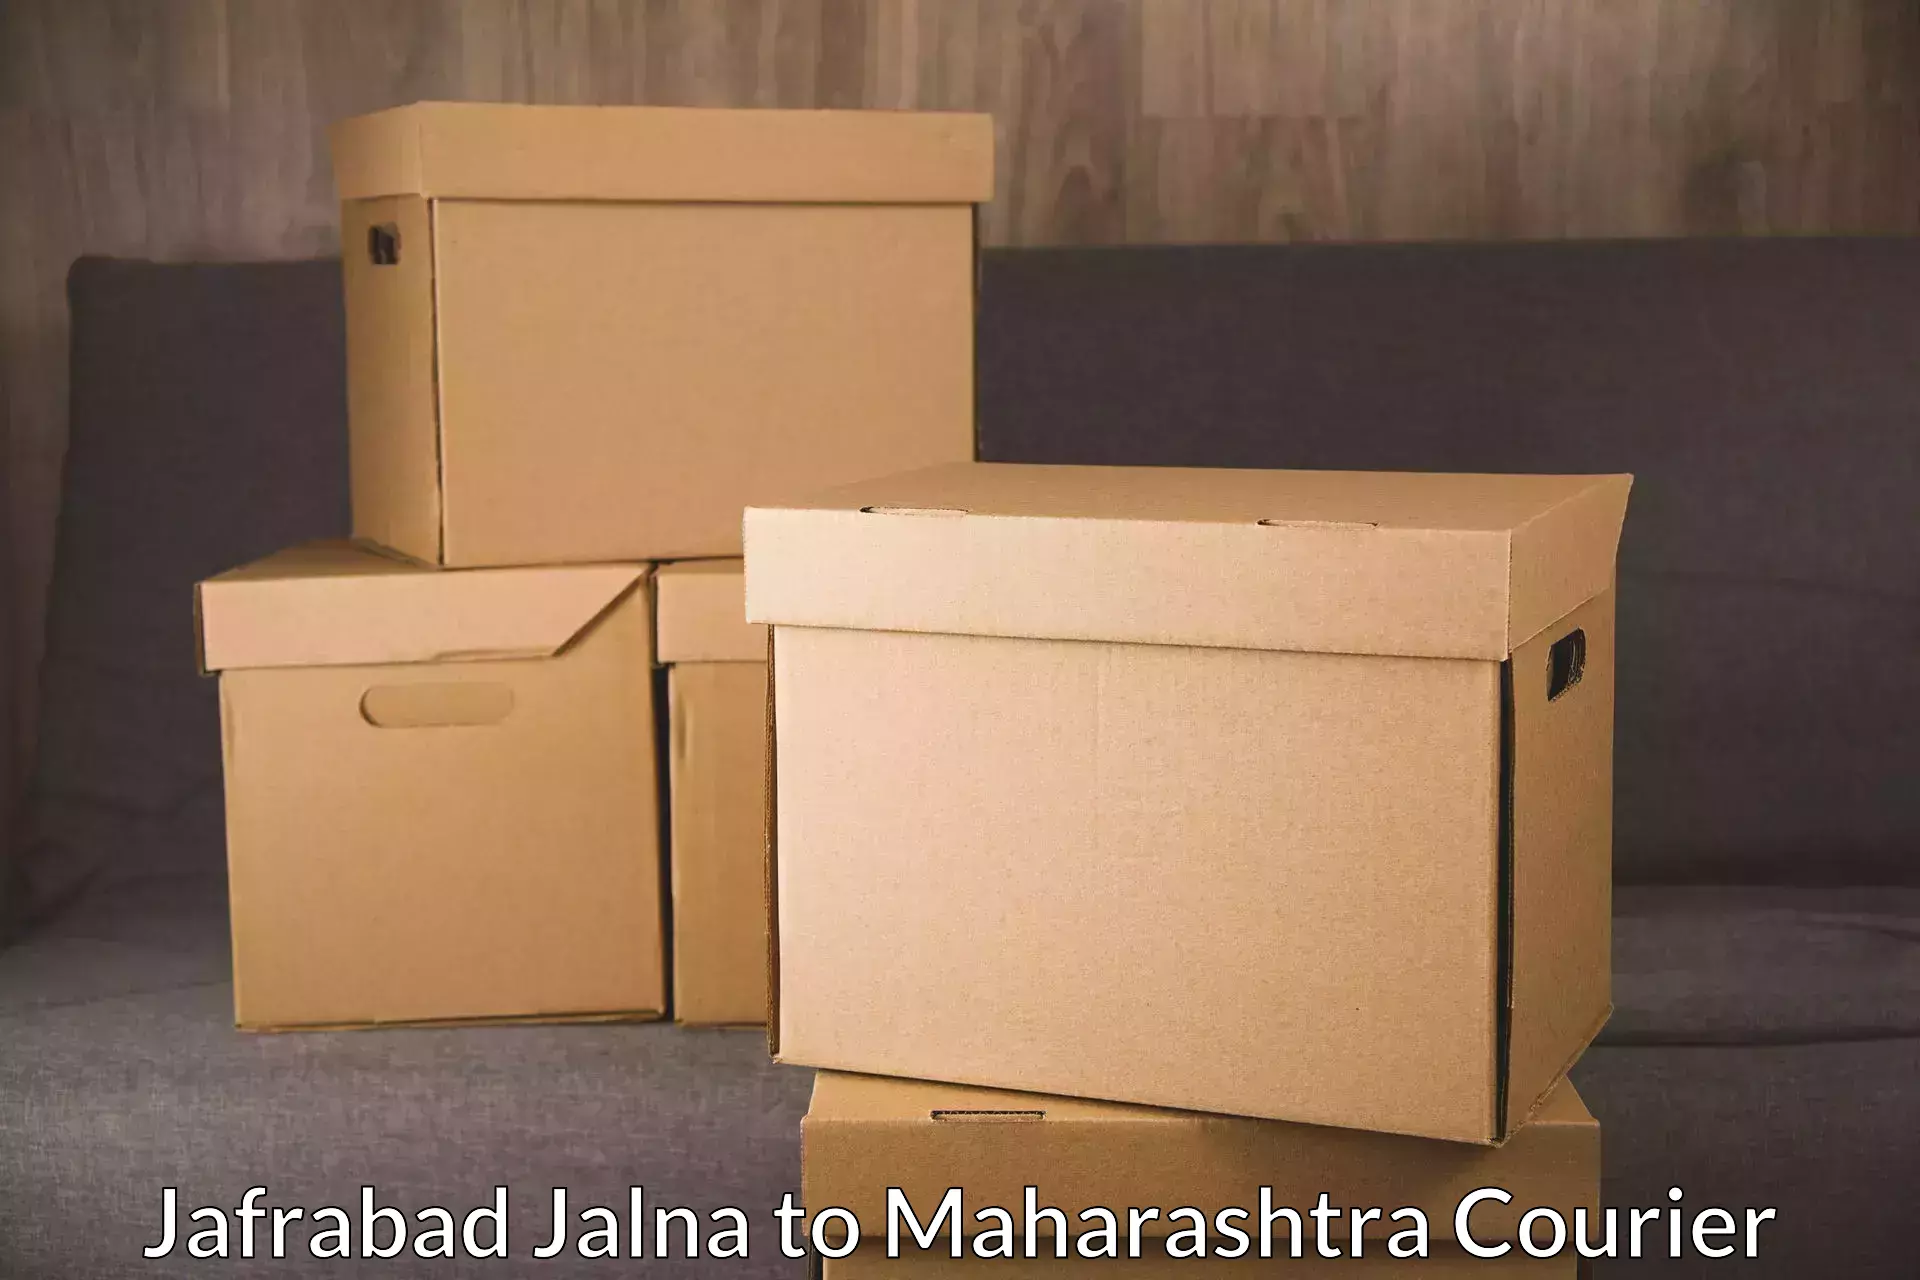 Courier service partnerships Jafrabad Jalna to Walchandnagar